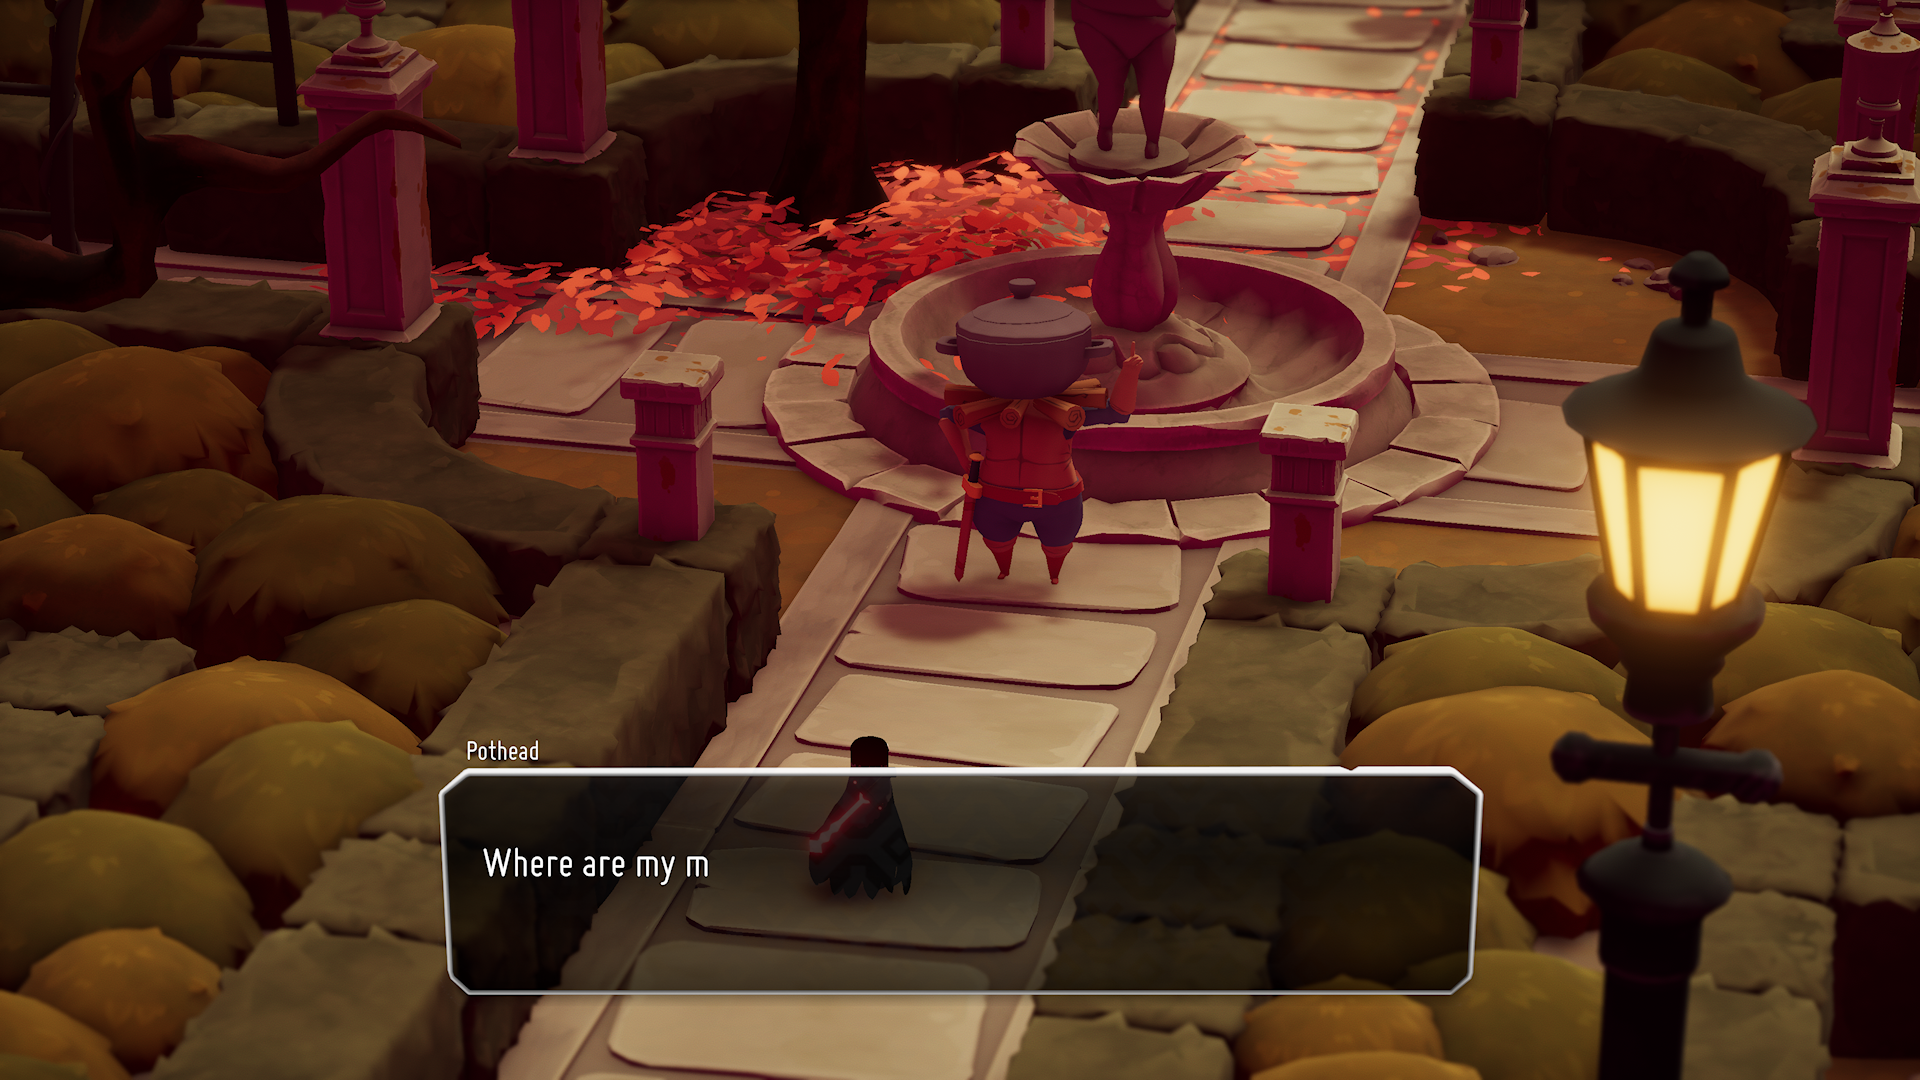 in-game screenshot of characters conversing